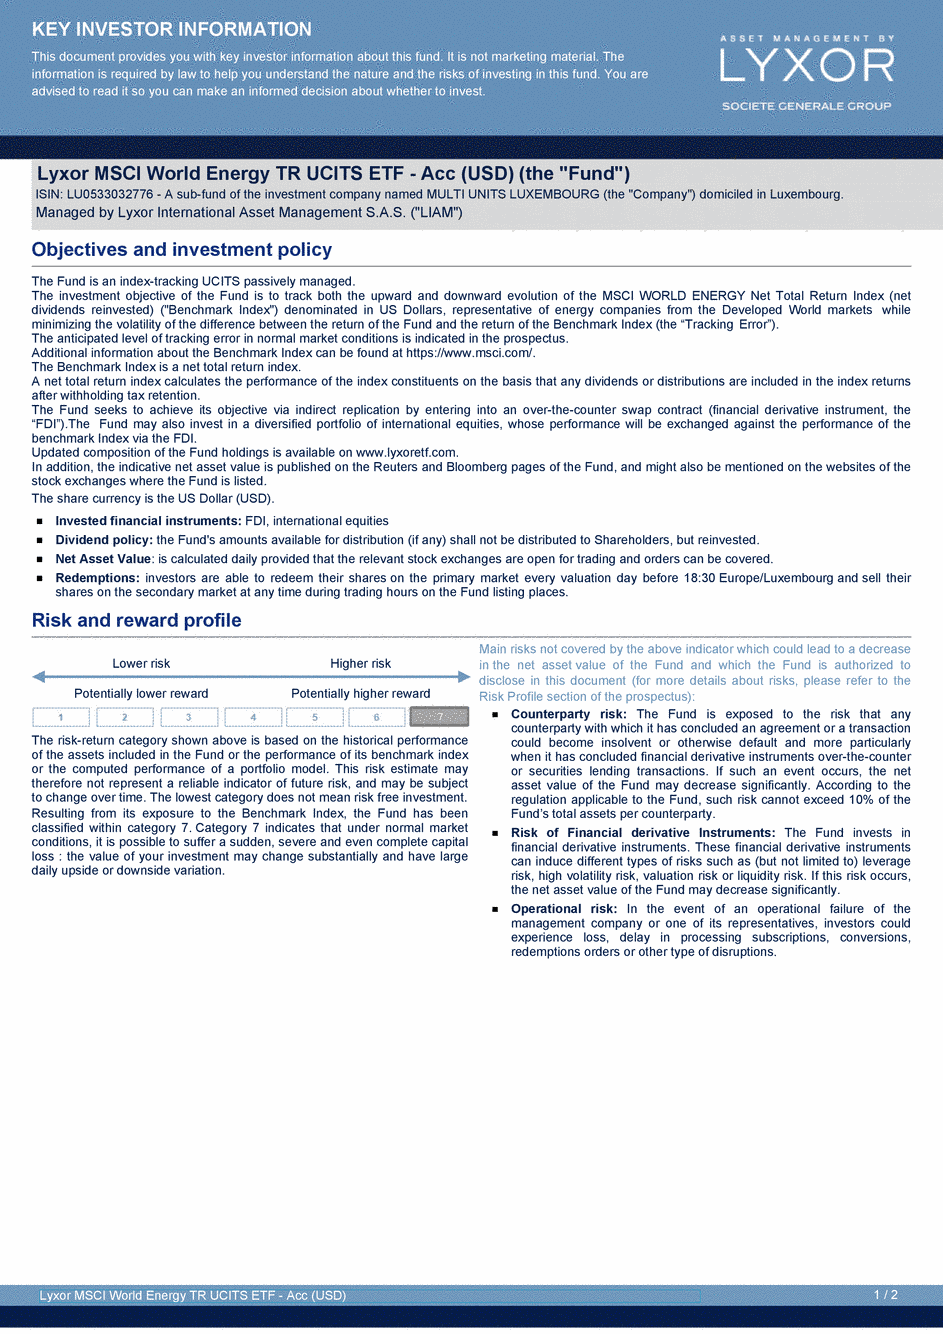 DICI Lyxor MSCI World Energy TR UCITS ETF - Acc (USD) - 26/10/2020 - Anglais